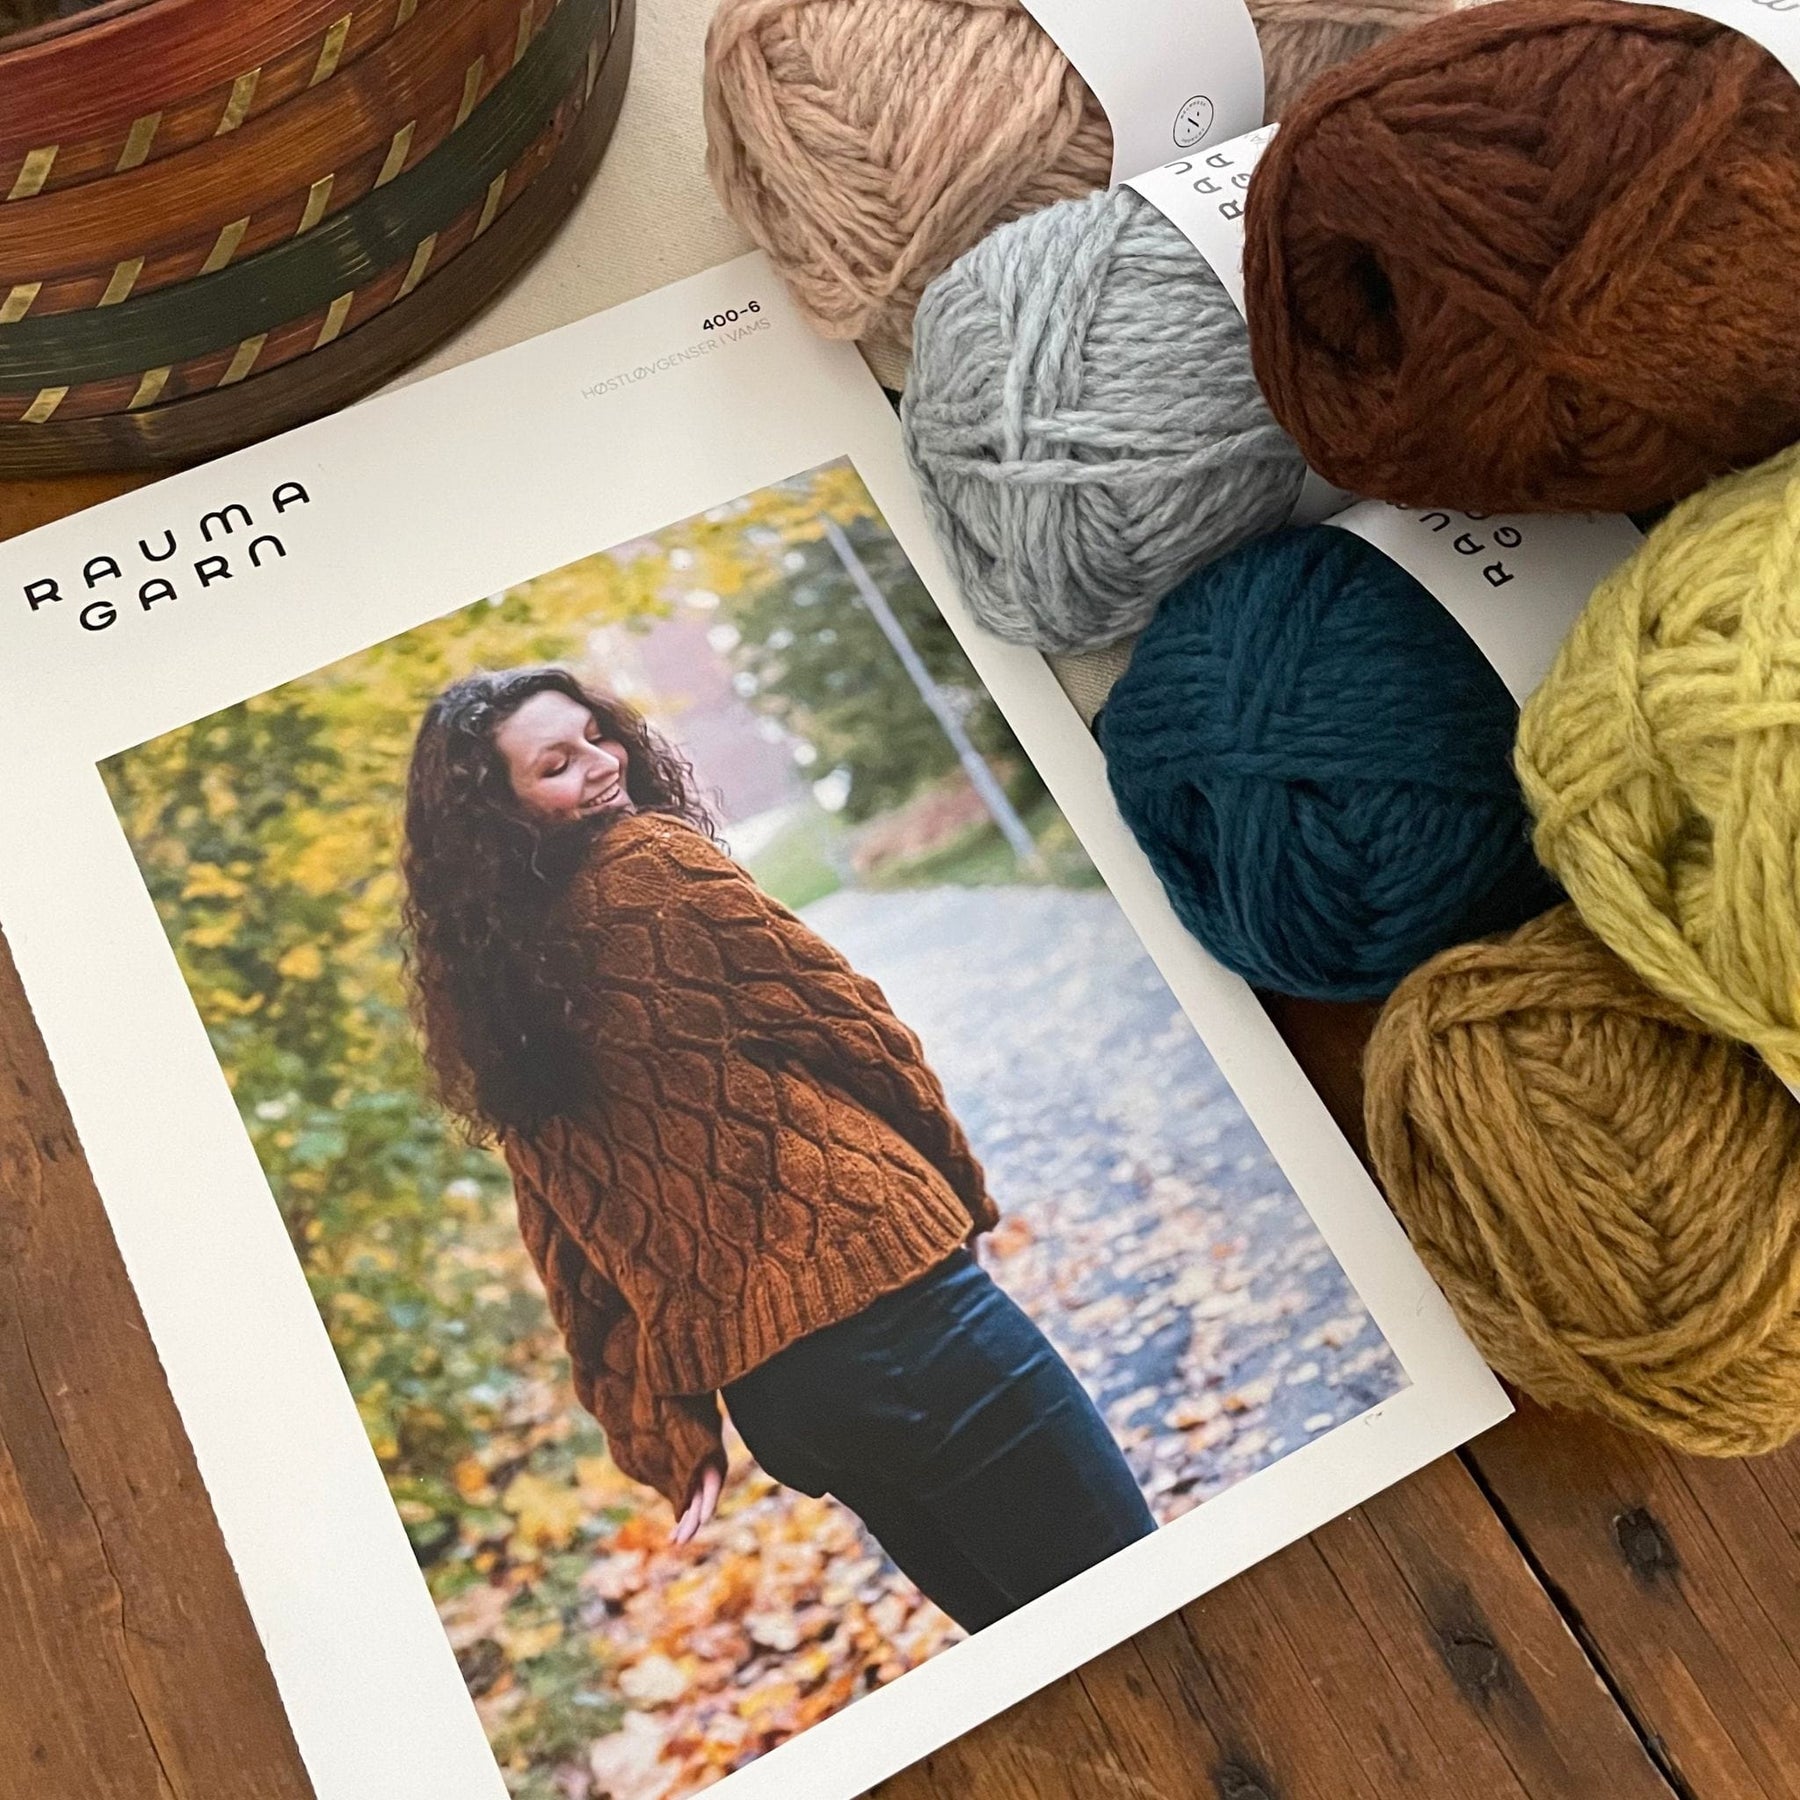 Wool Jeanie, Moorlands Wool & Crafts, Luxury Wool Craft Supplies, Knitting Supplies